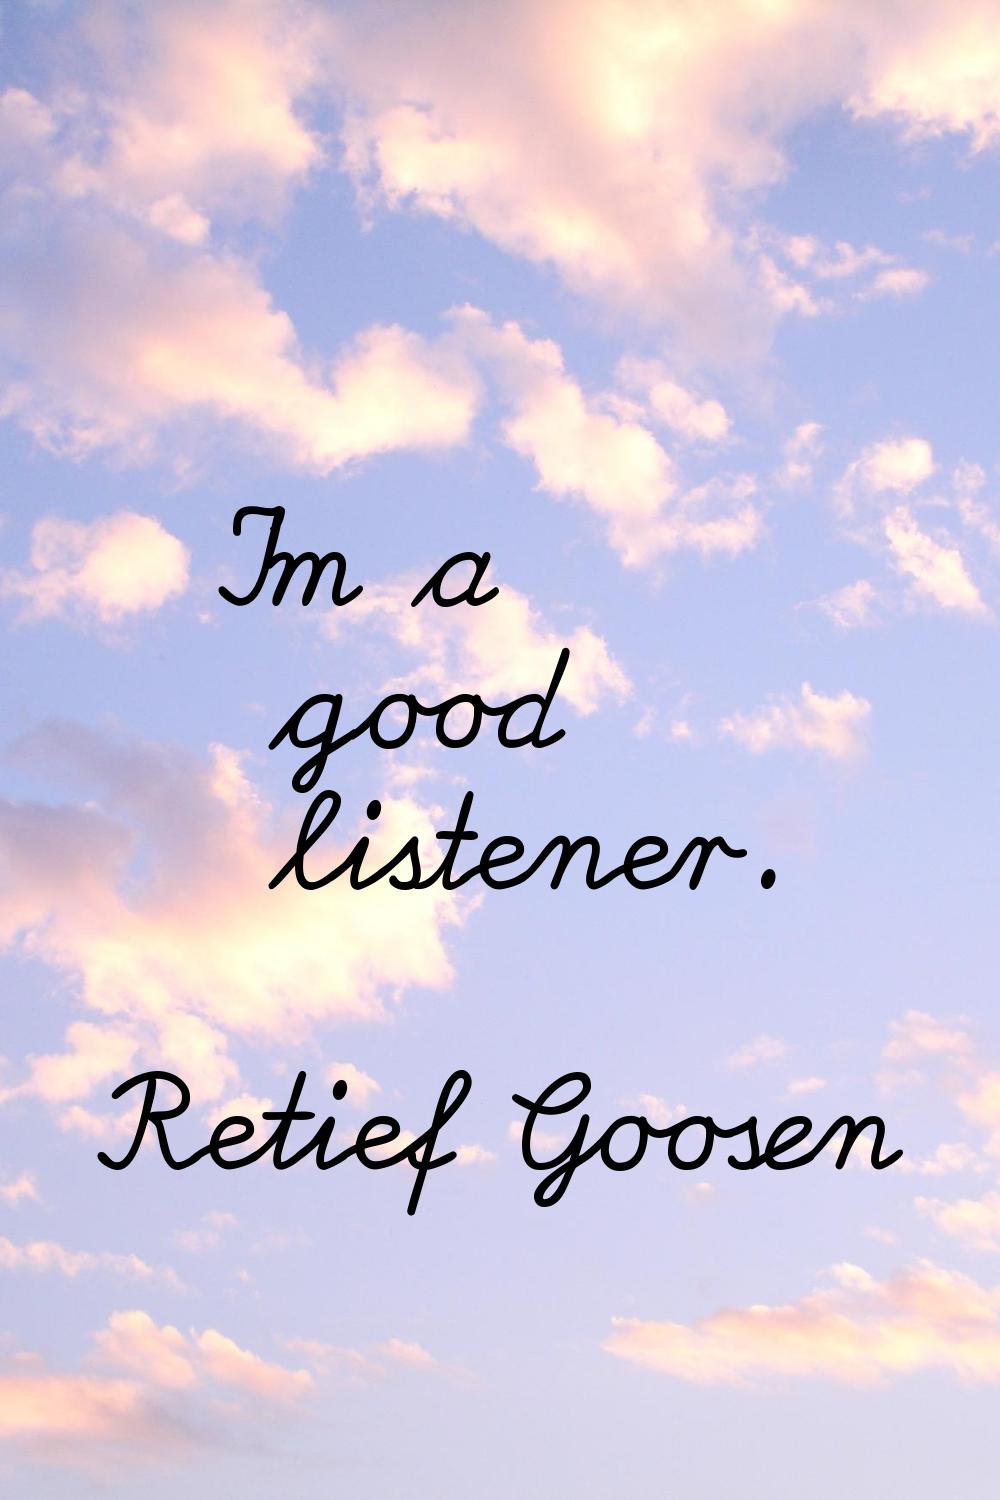 I'm a good listener.